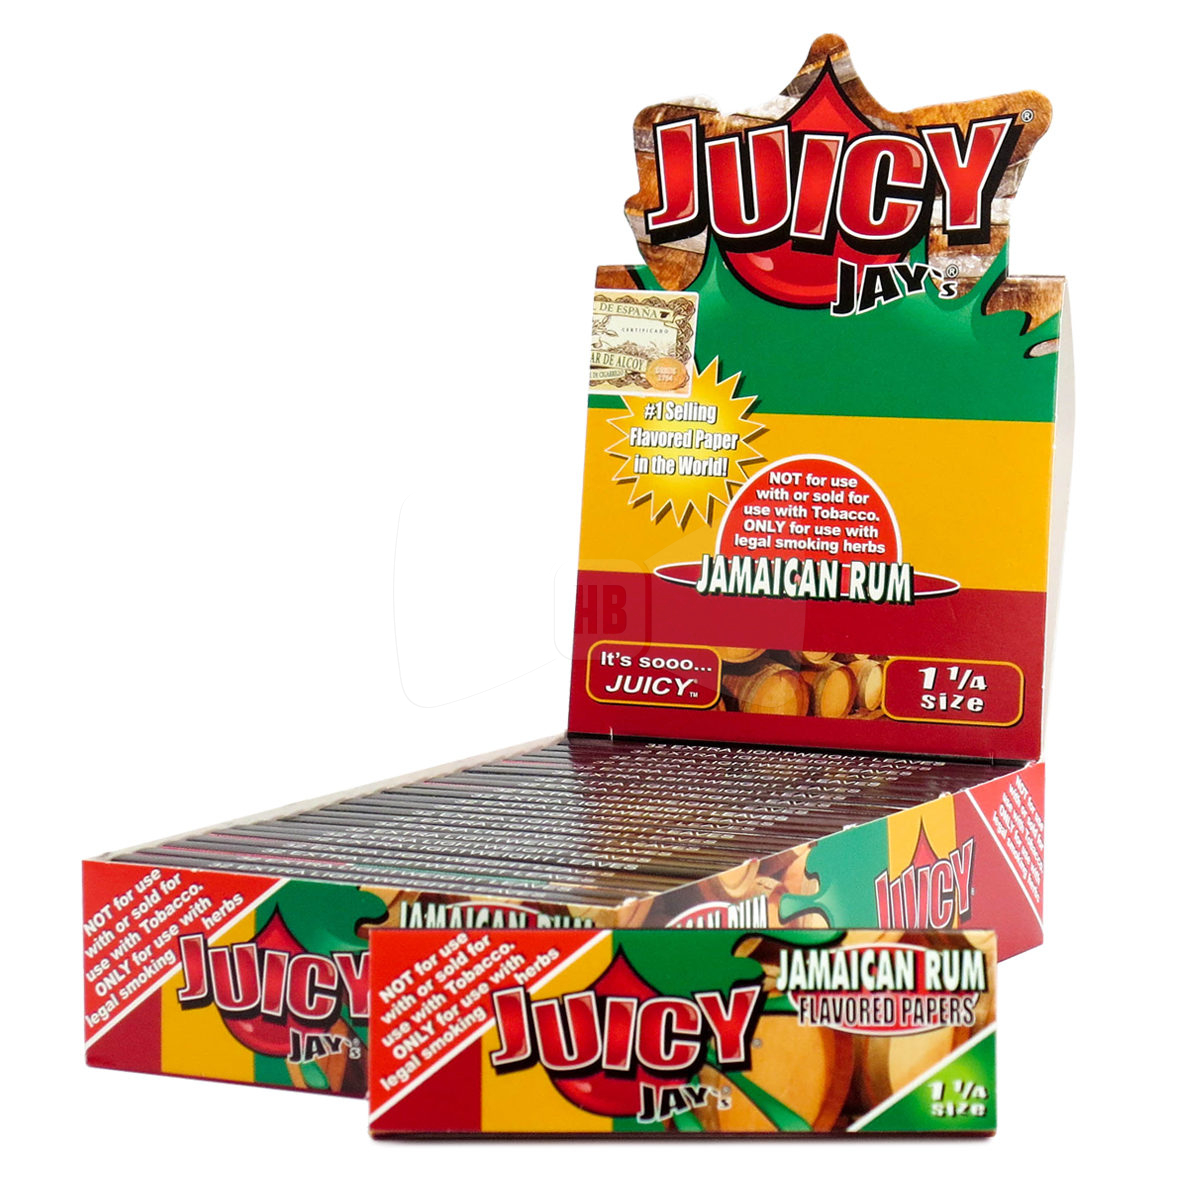 Juicy Jays Jamaican Rum Rolling Papers Full Box (24 packs) 1 1/4